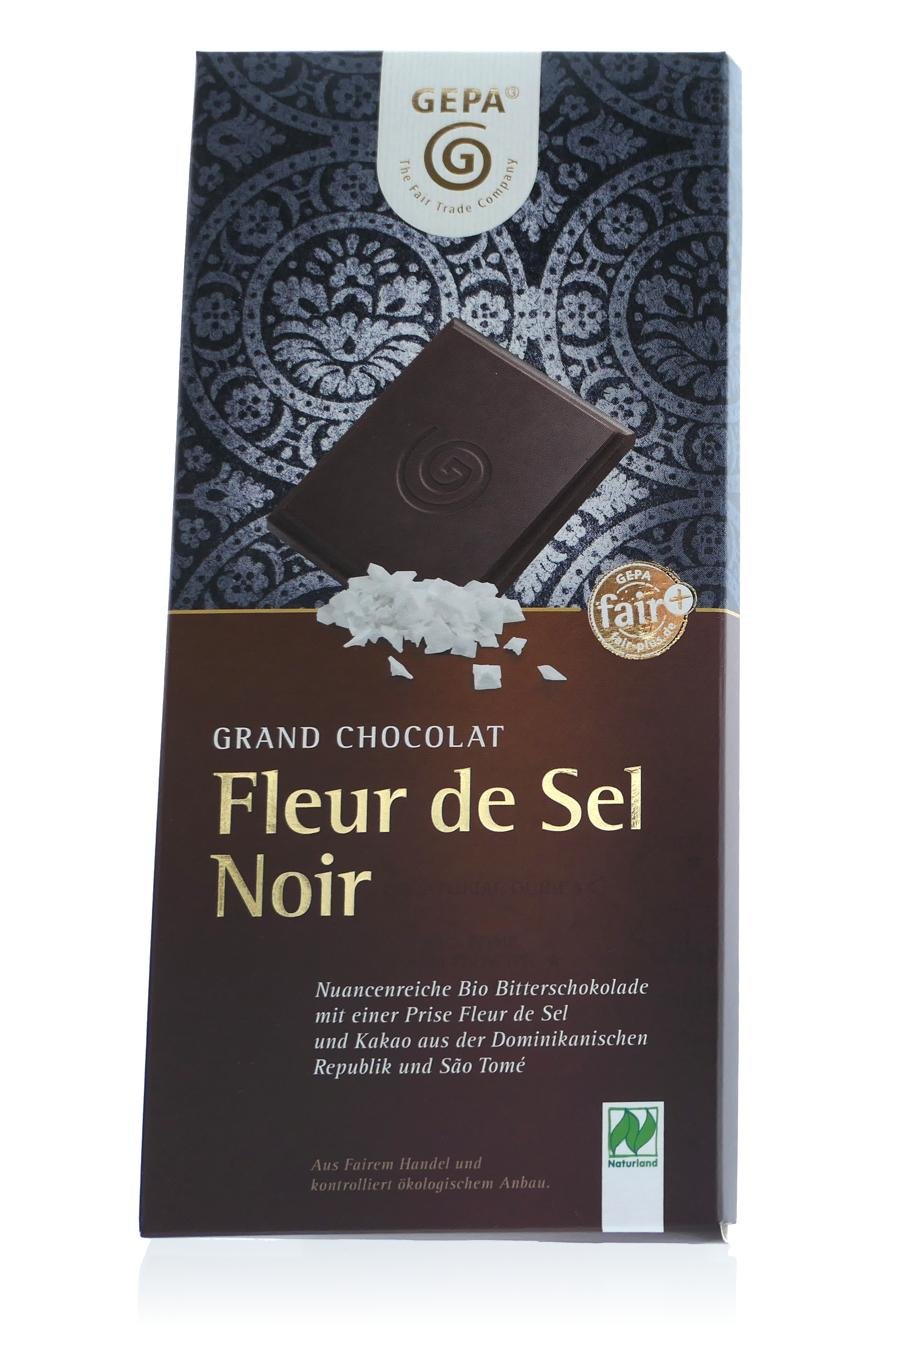 Grand Chocolat Fleur de Sel Noir (c) M. Kerk